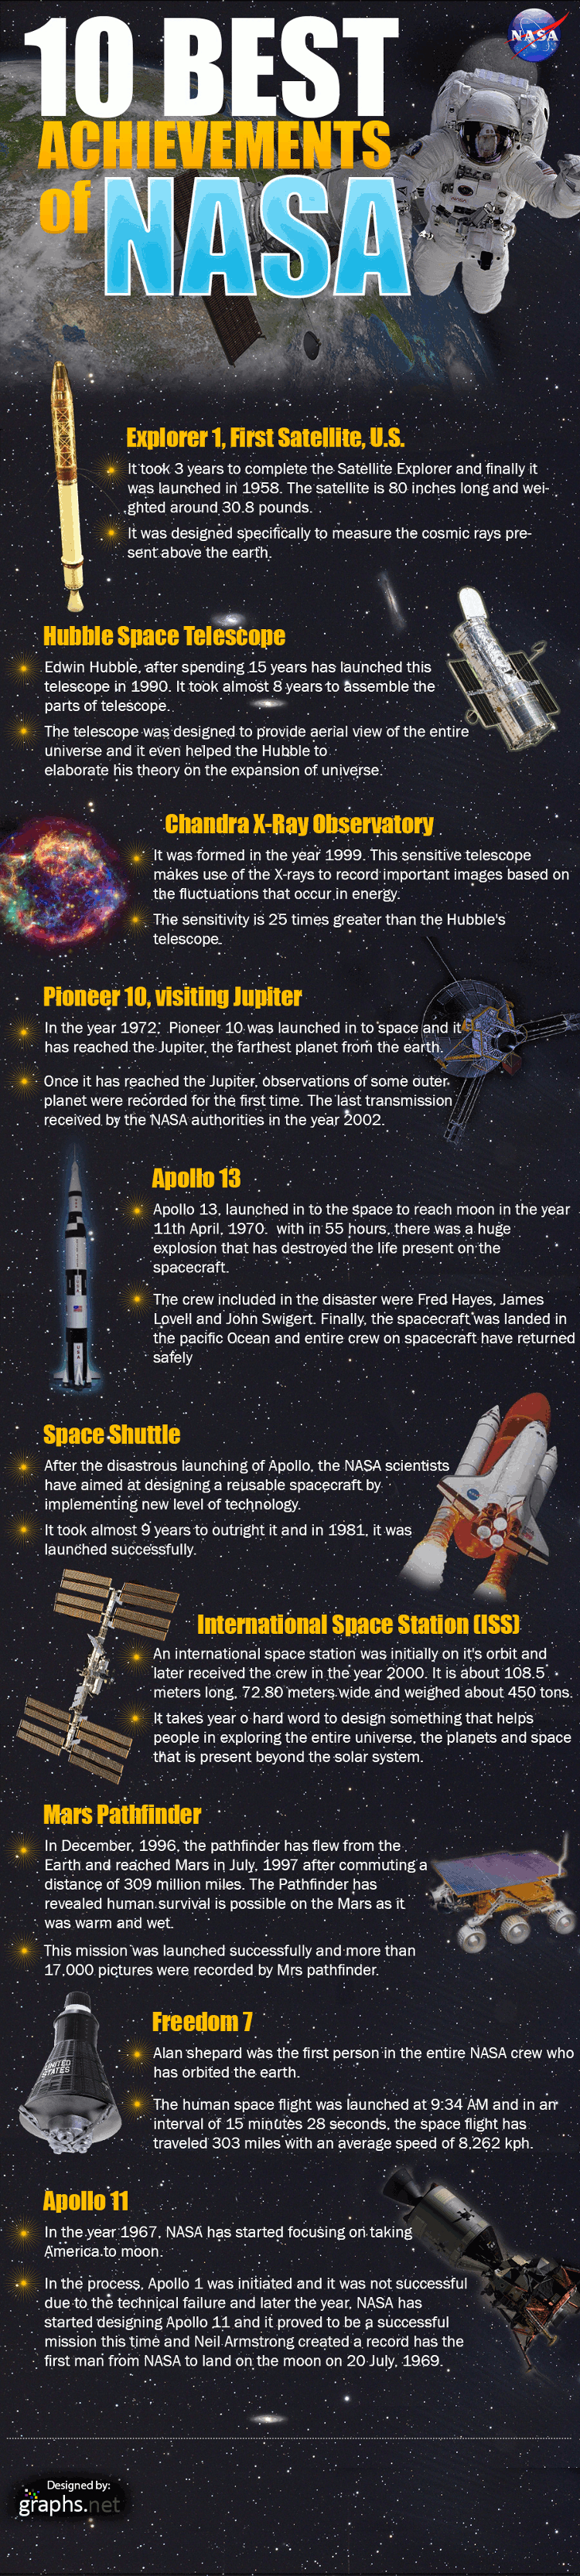 Top Achievements of NASA